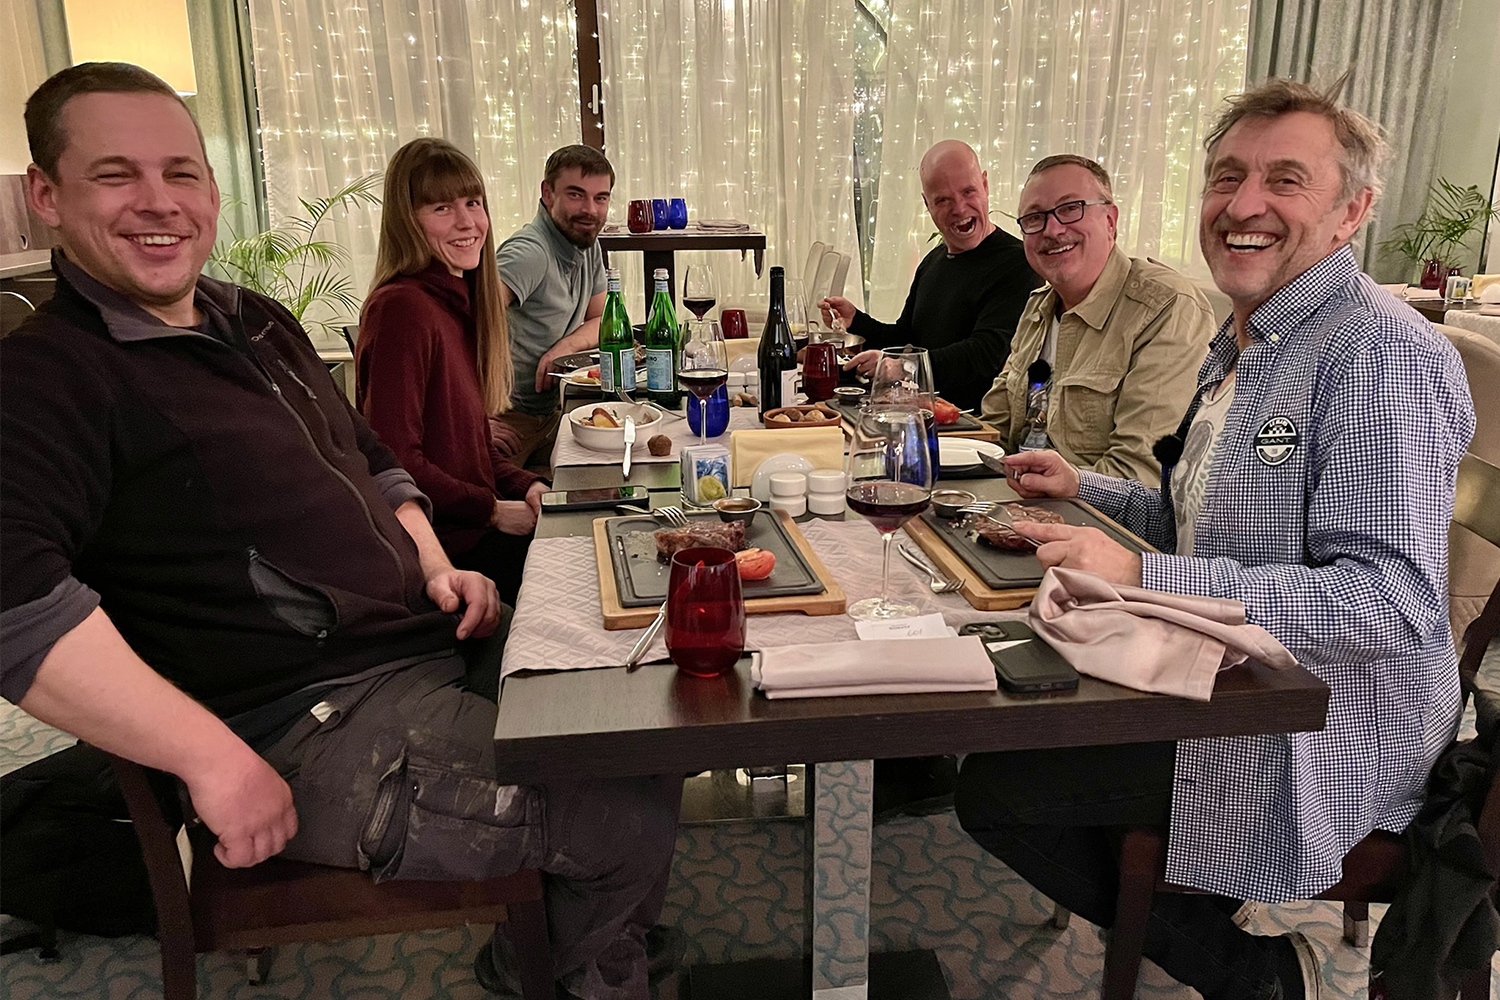 The DefenderX group, including Sofie Rørdam, Misha Vikhrov, Mikael Strandberg, Jeff Willner, and Steve Brooks, sitting down to dinner in Russia